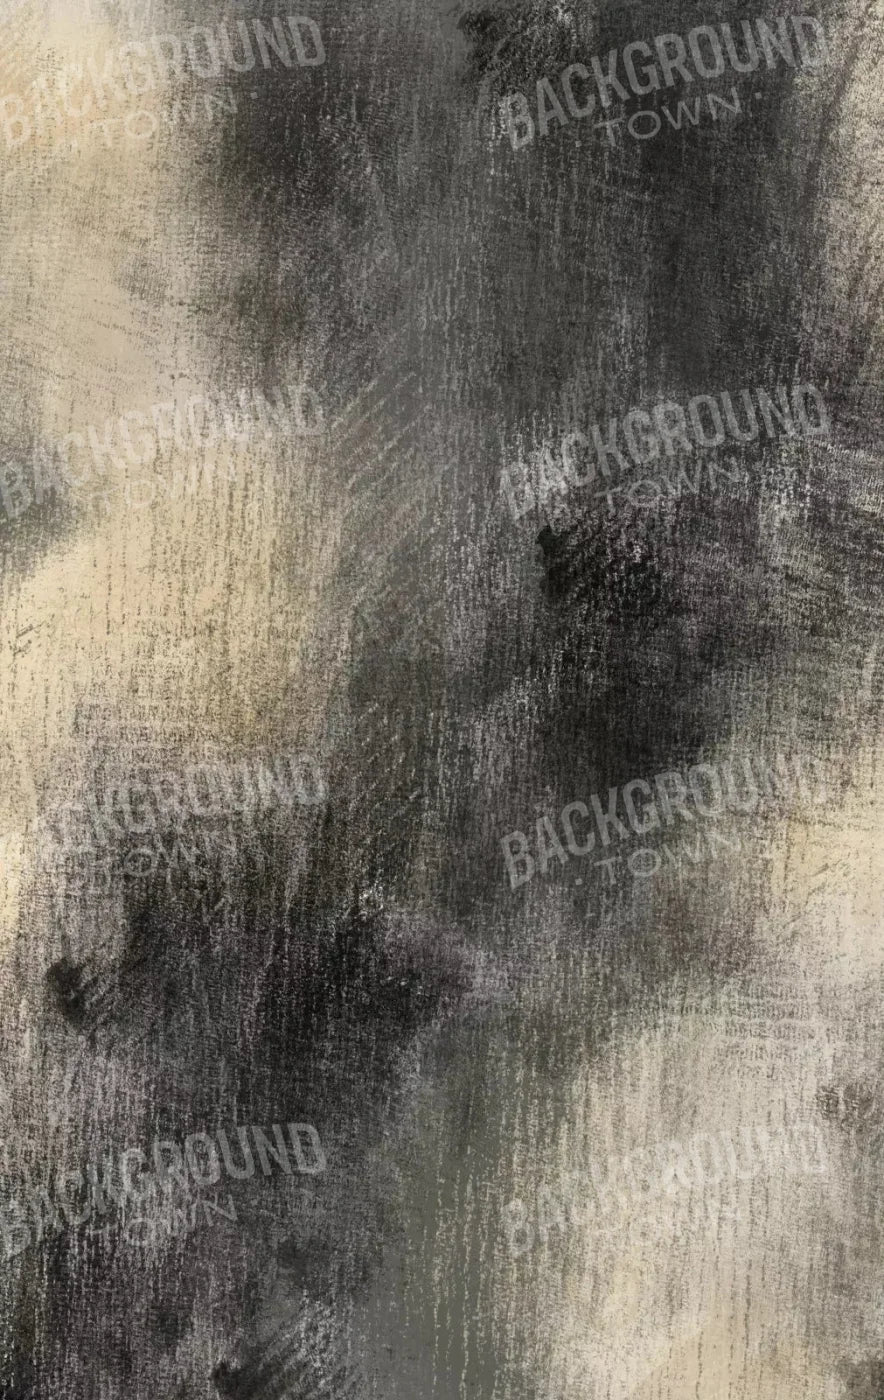 Dignity 10X16 Ultracloth ( 120 X 192 Inch ) Backdrop